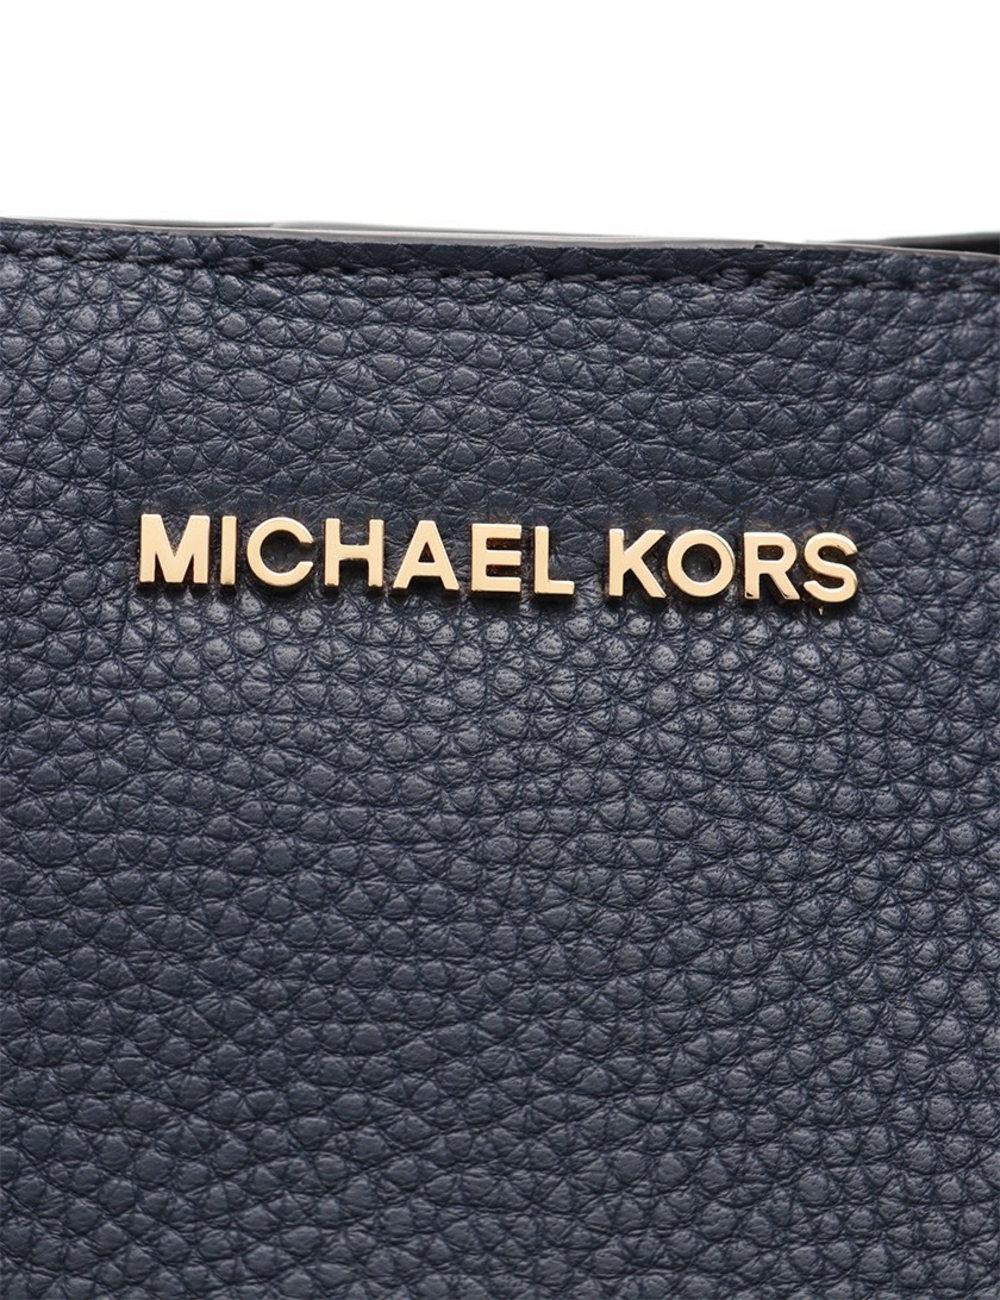 Michael Kors Tote With Gift Bag Kimberly Grab Bag Navy / Black # 35H8GKFT3T